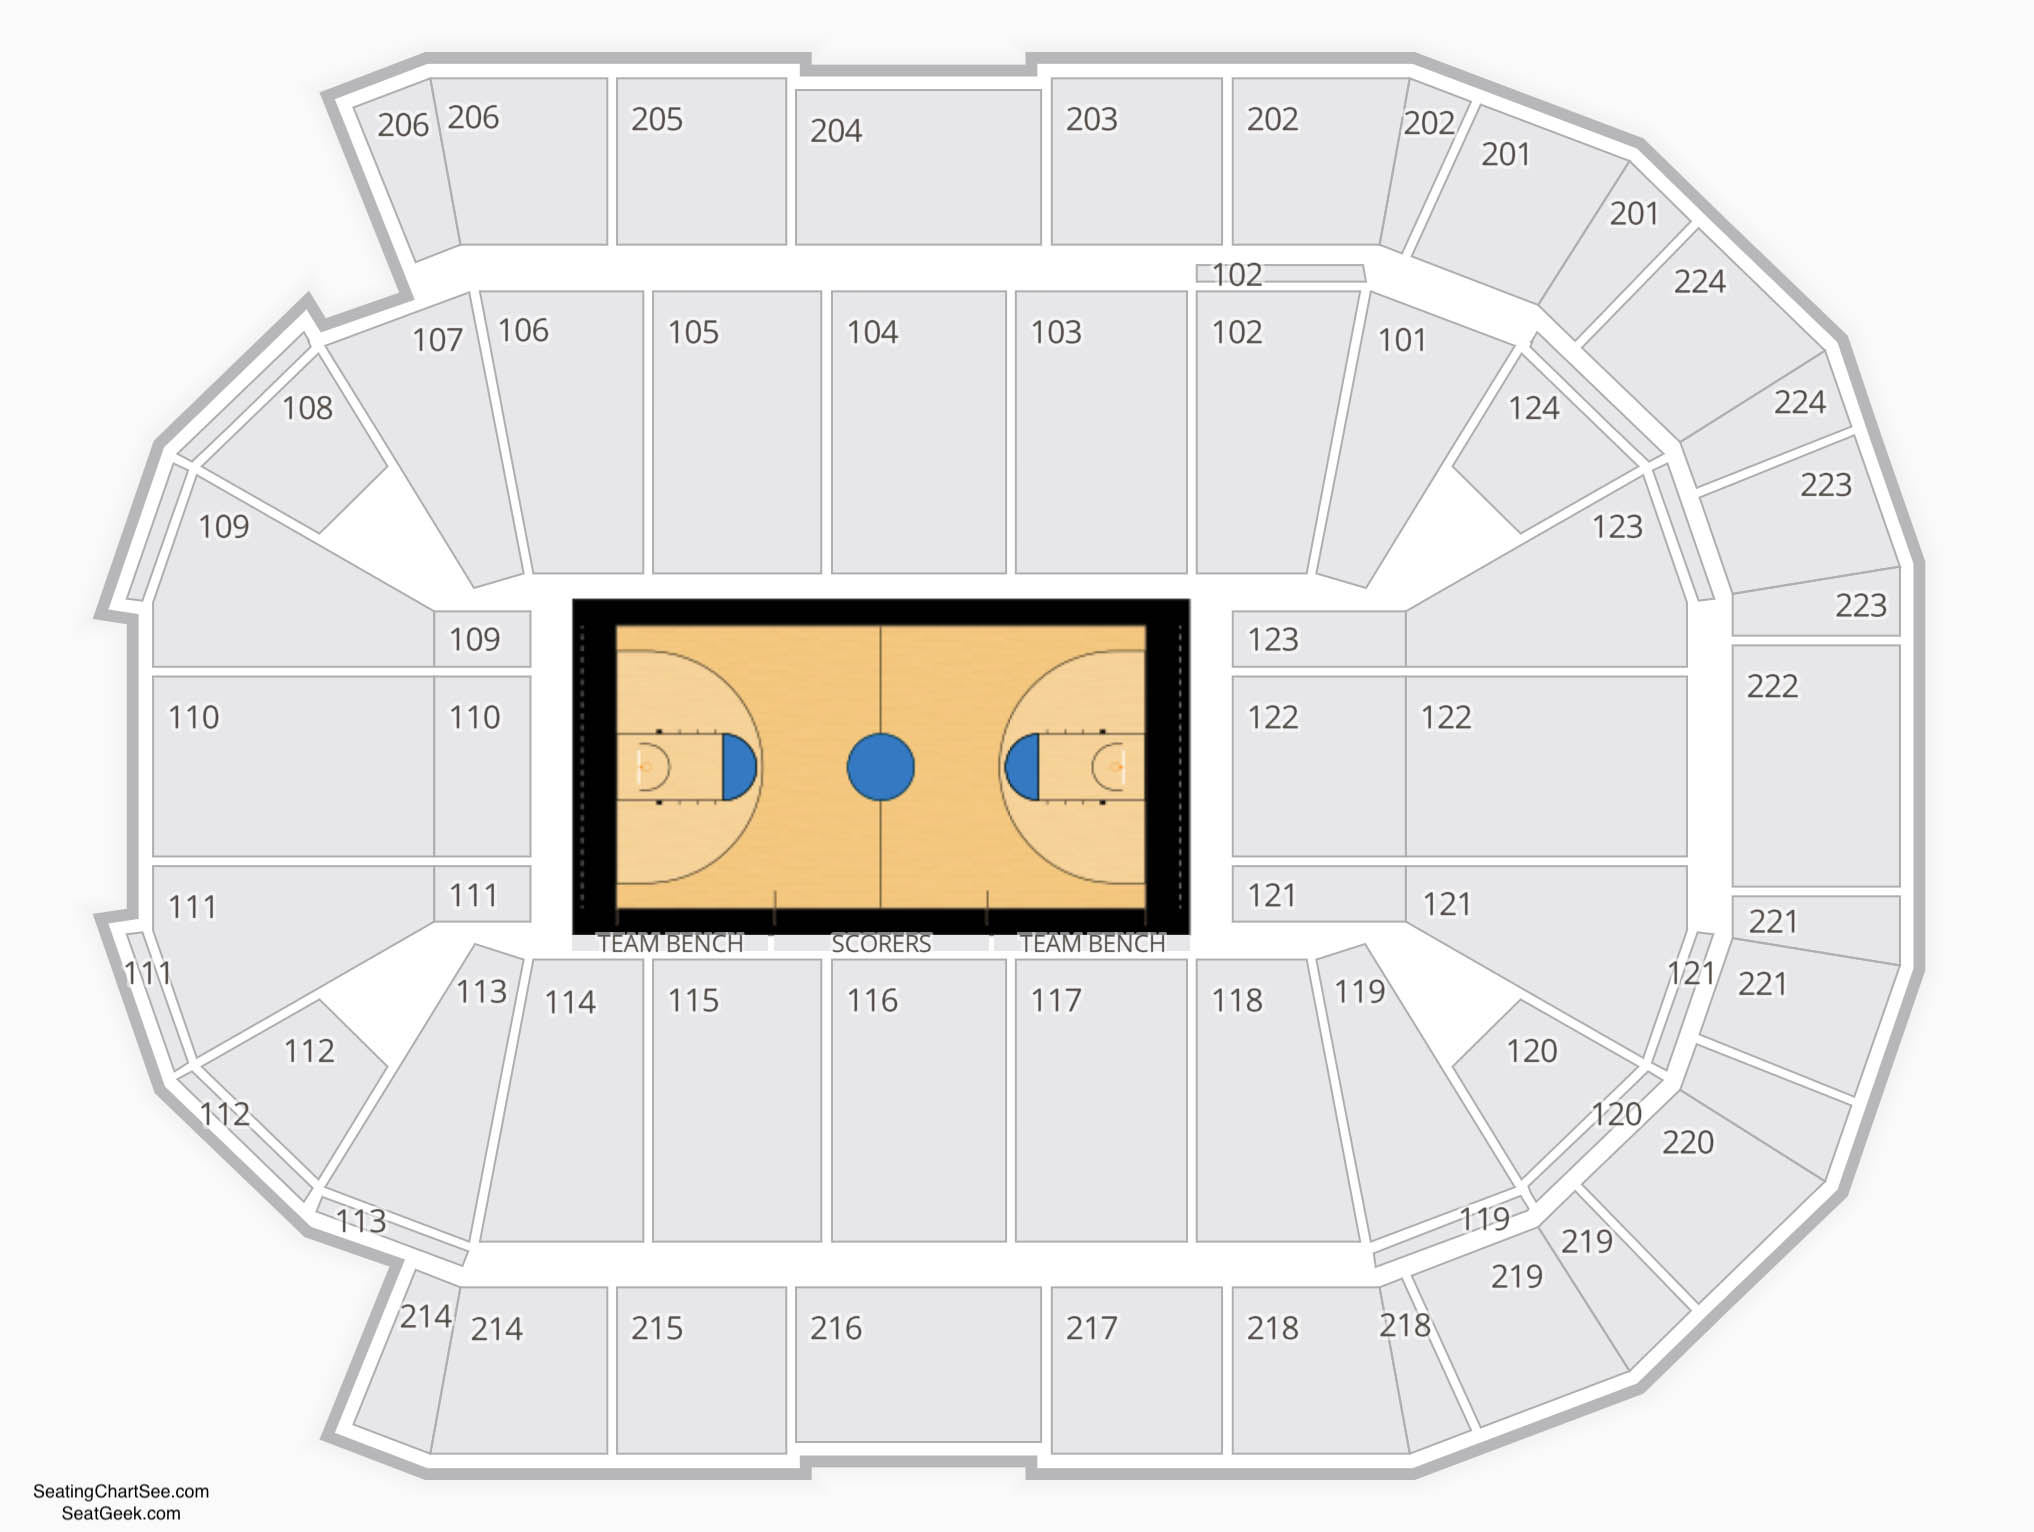 Spokane Arena Seating Charts Views Games Answers & Cheats